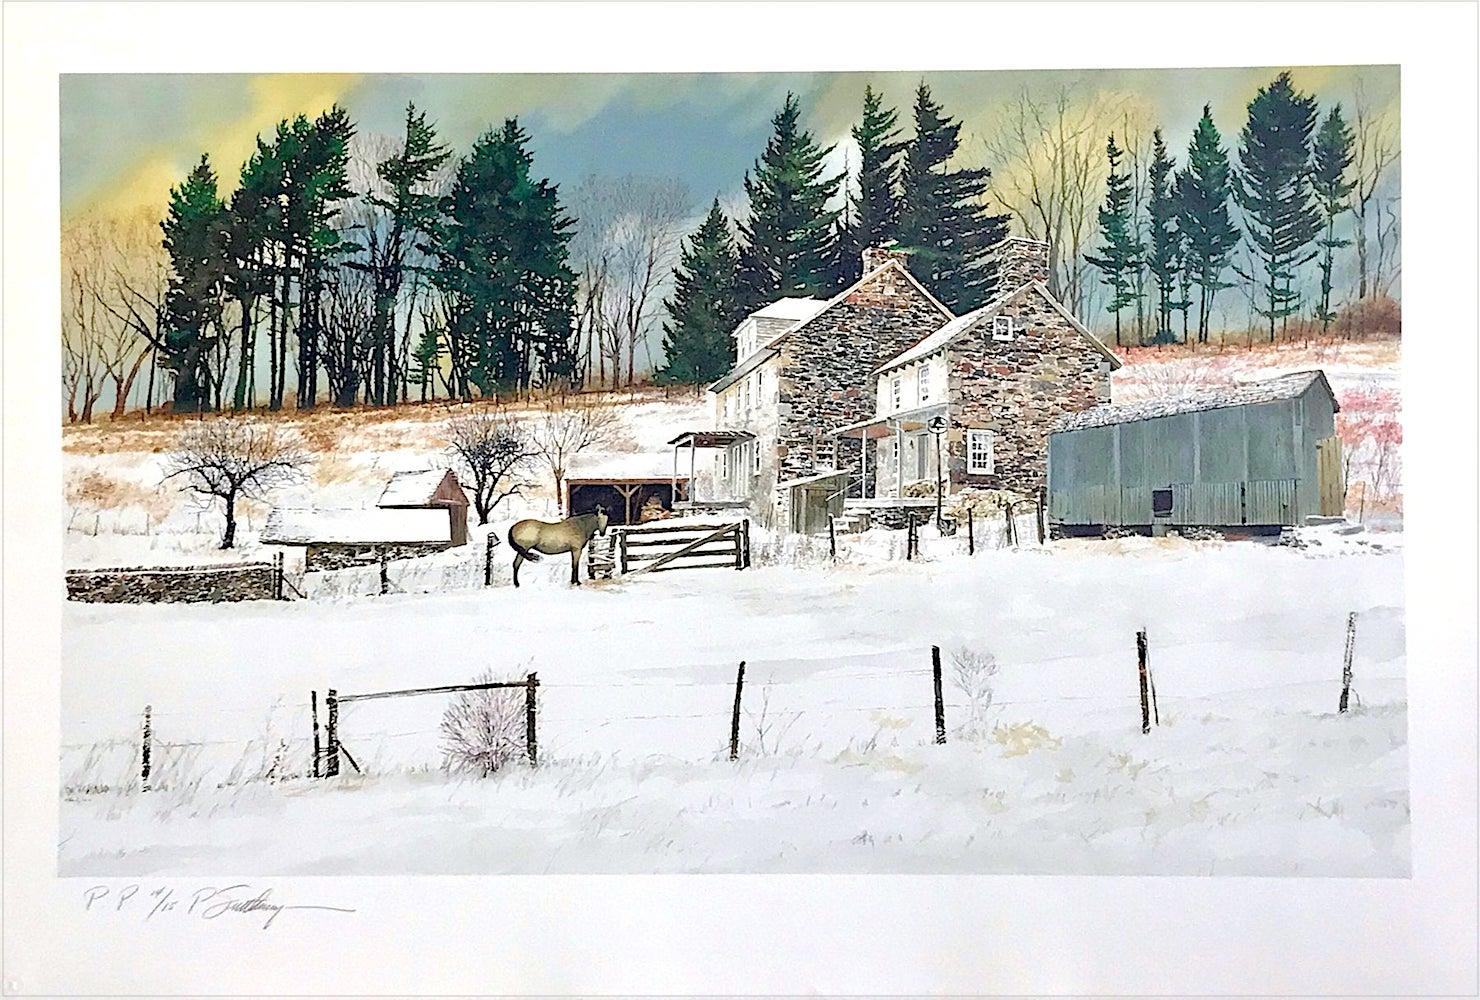 Peter Sculthorpe Landscape Print - LITTLEWOODS, Signed Lithograph, Historic Stone Farmhouse, Bucks County Landscape